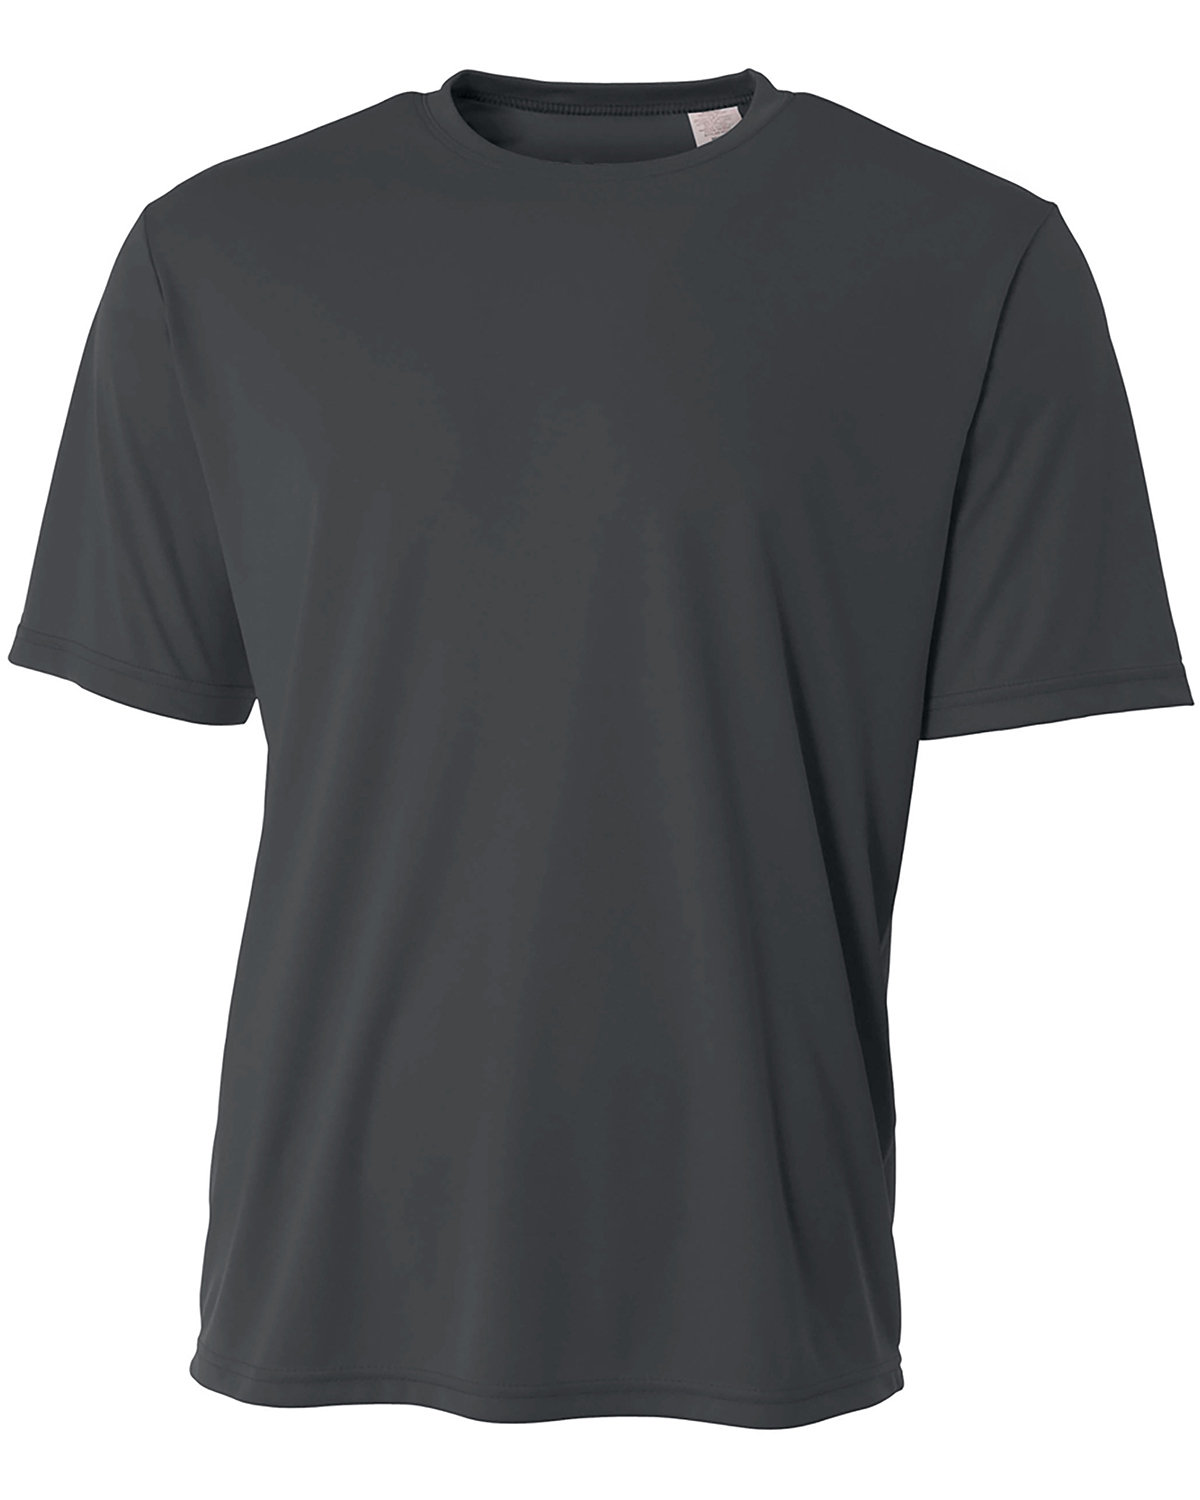 A4 Men's Sprint Performance T-Shirt GRAPHITE 